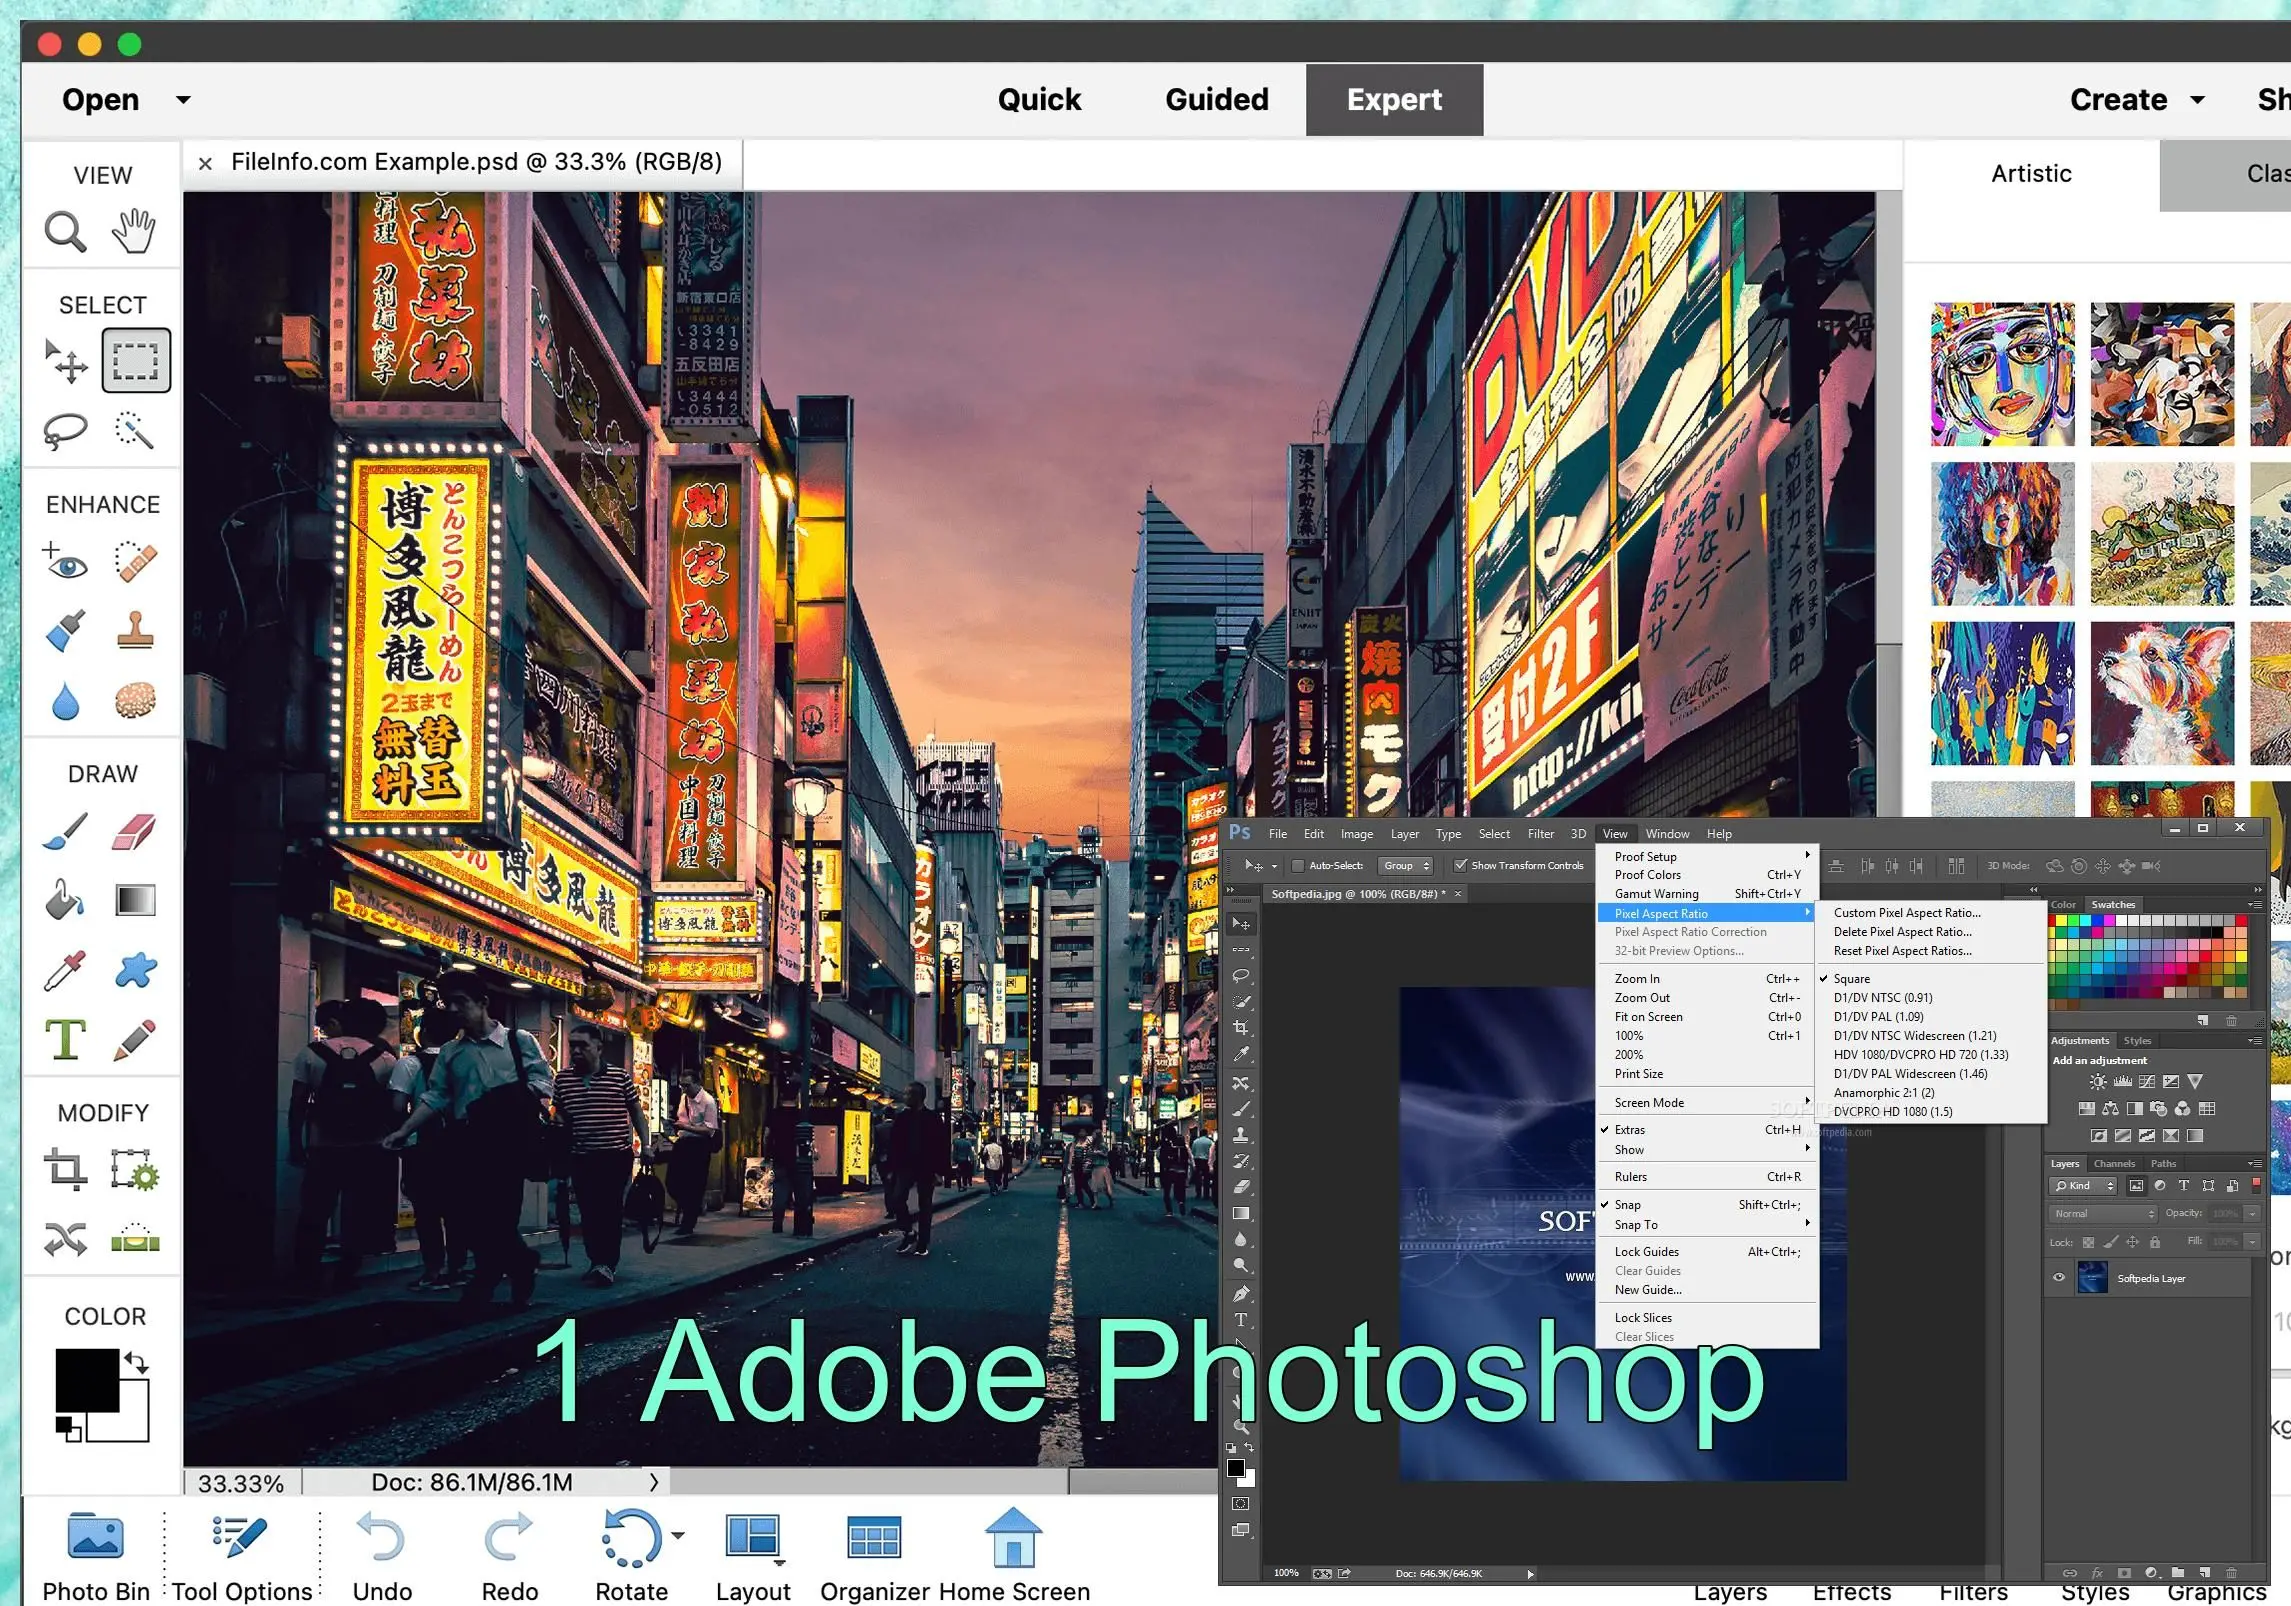  Adobe Photoshop..